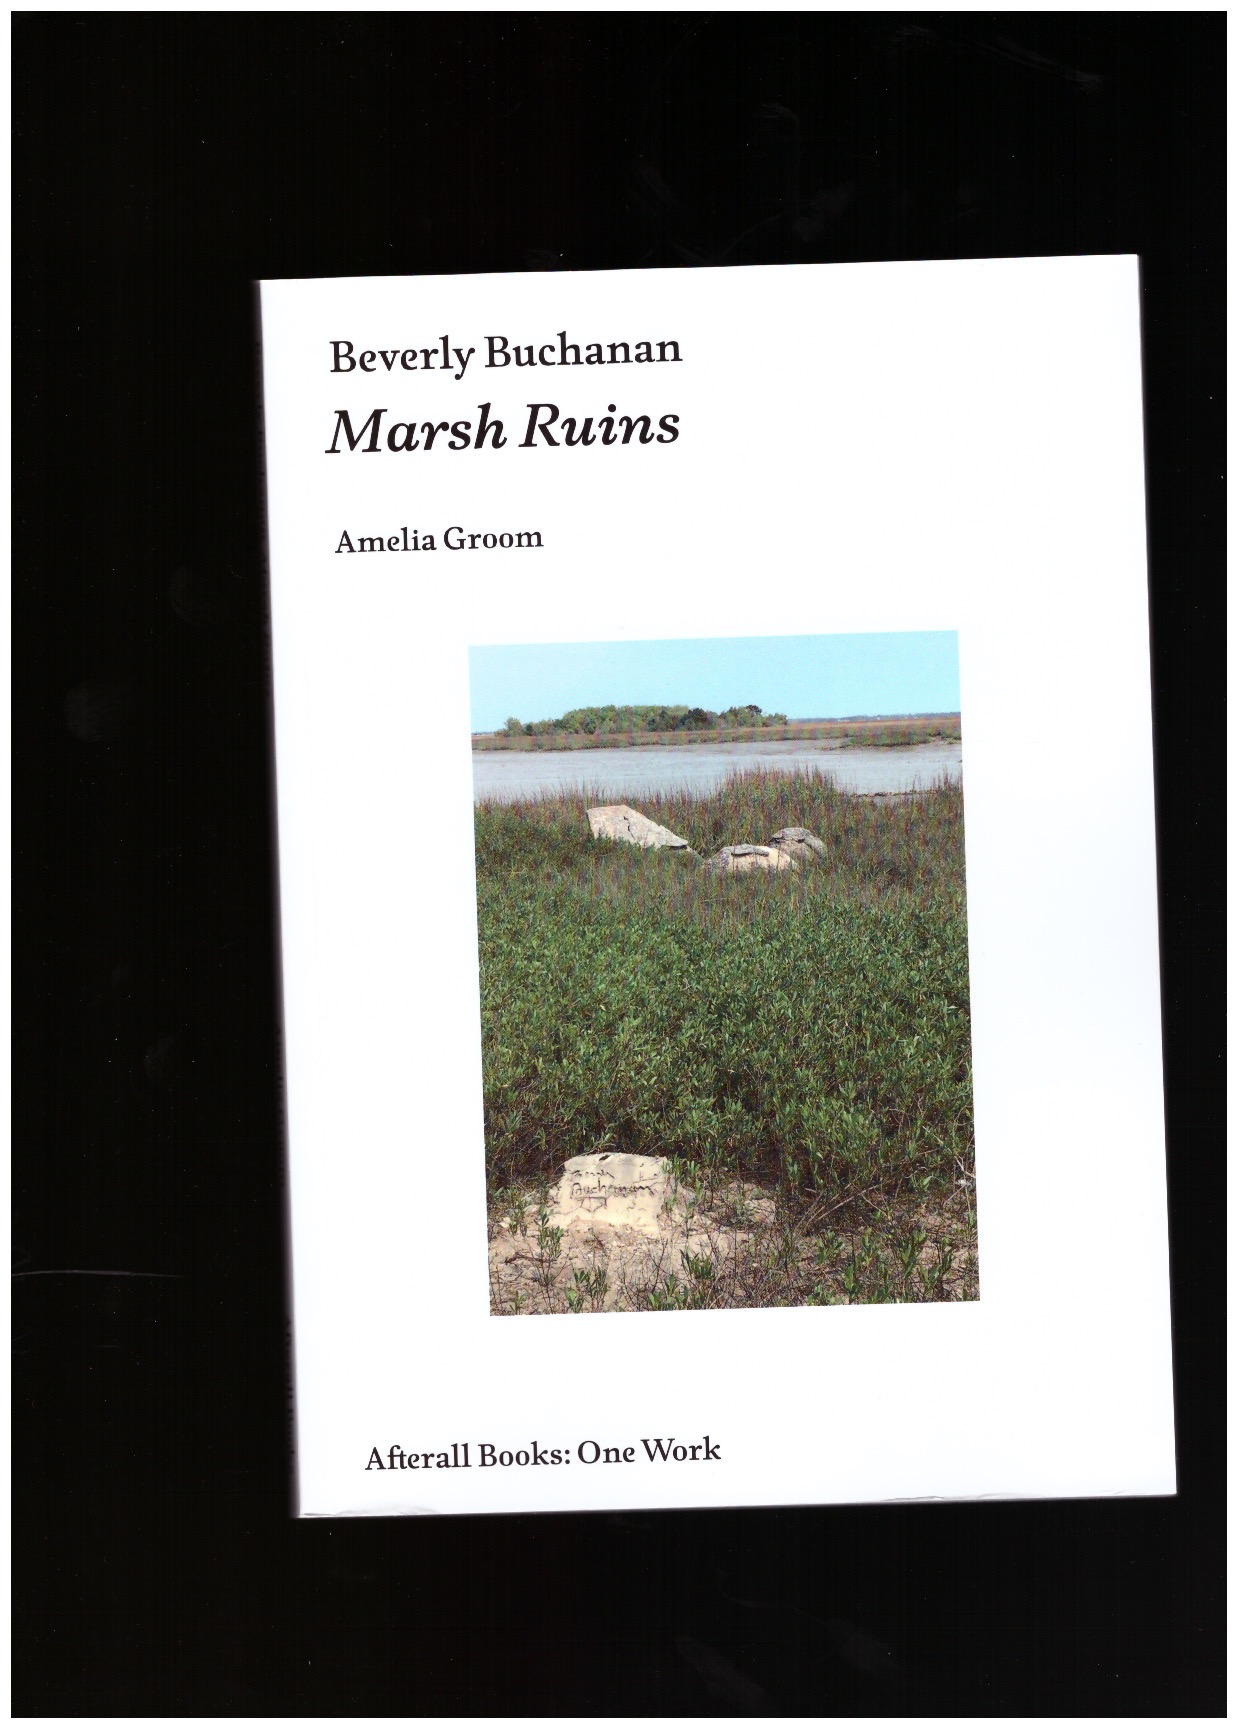 GROOM, Amelia - Beverly Buchanan: Marsh Ruins